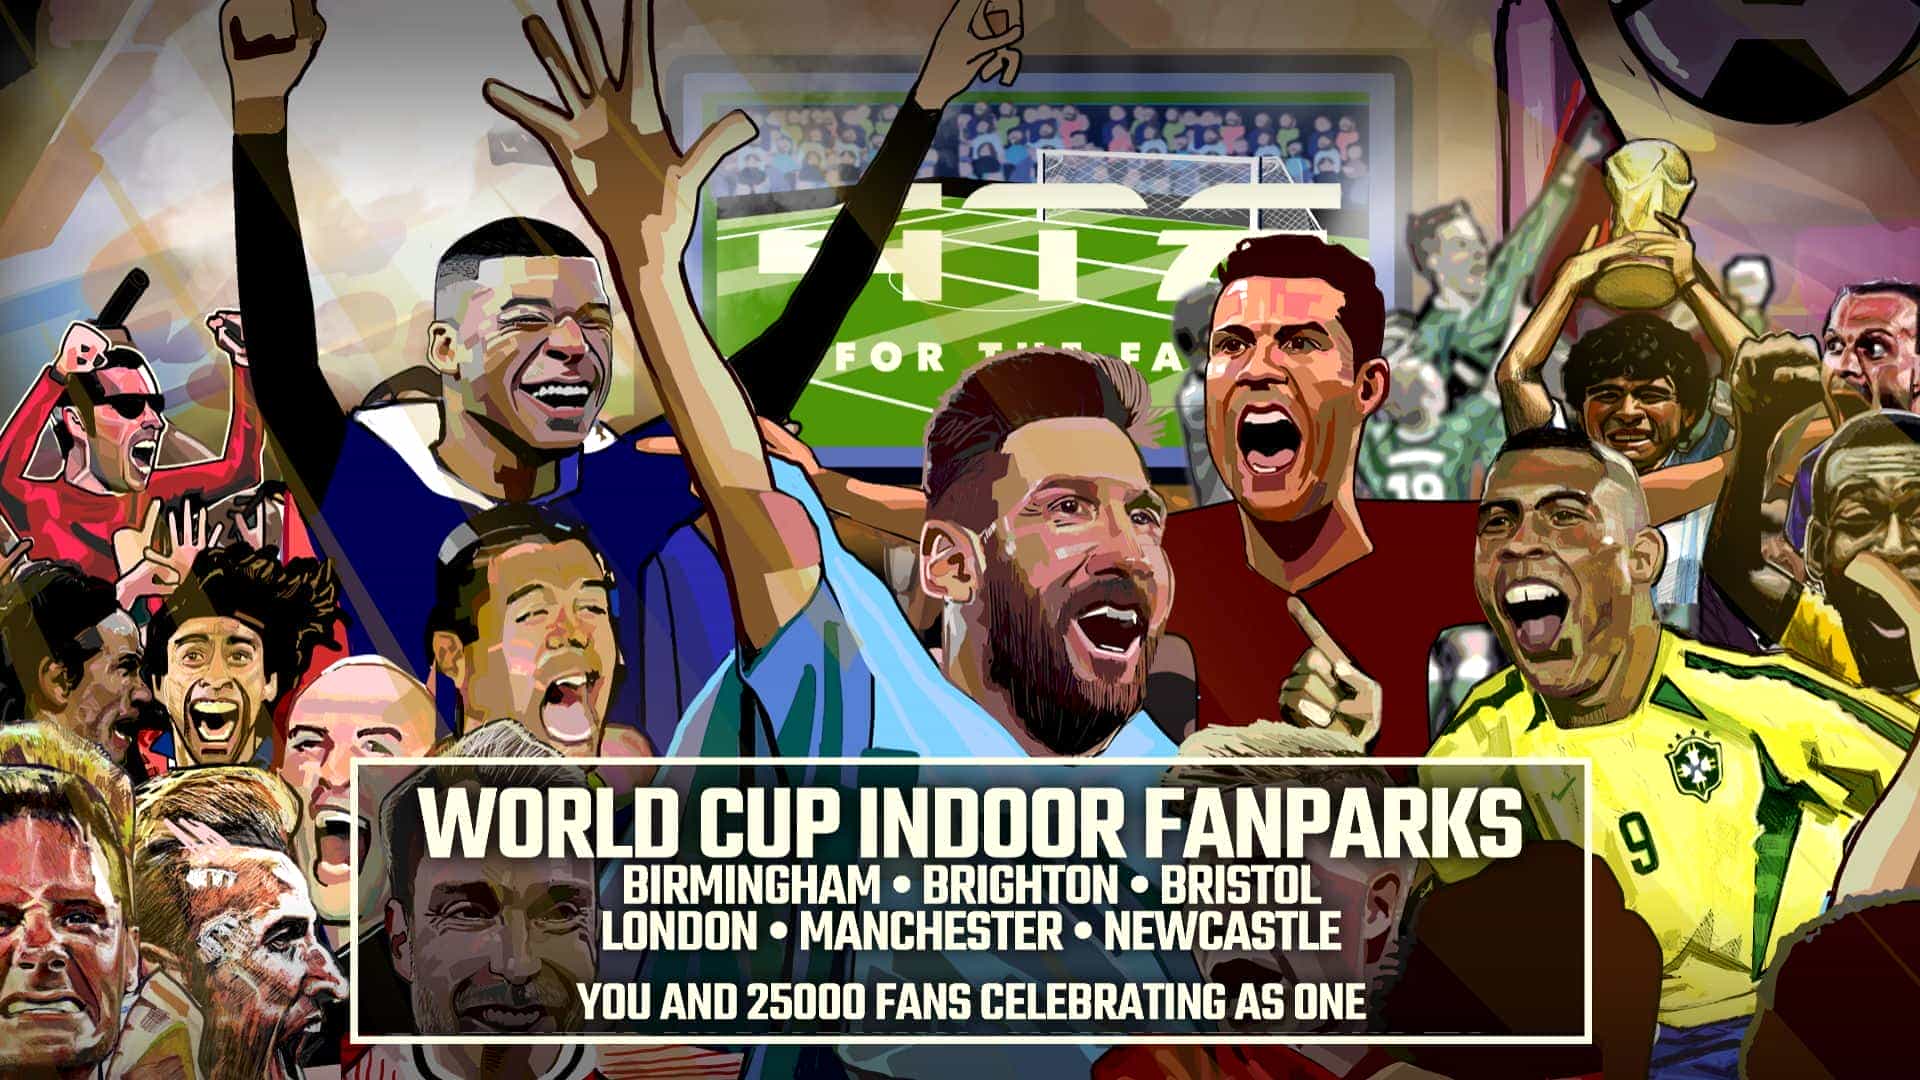 World Cup Indoor Fanpark with Wes Brown & Joleon Lescott